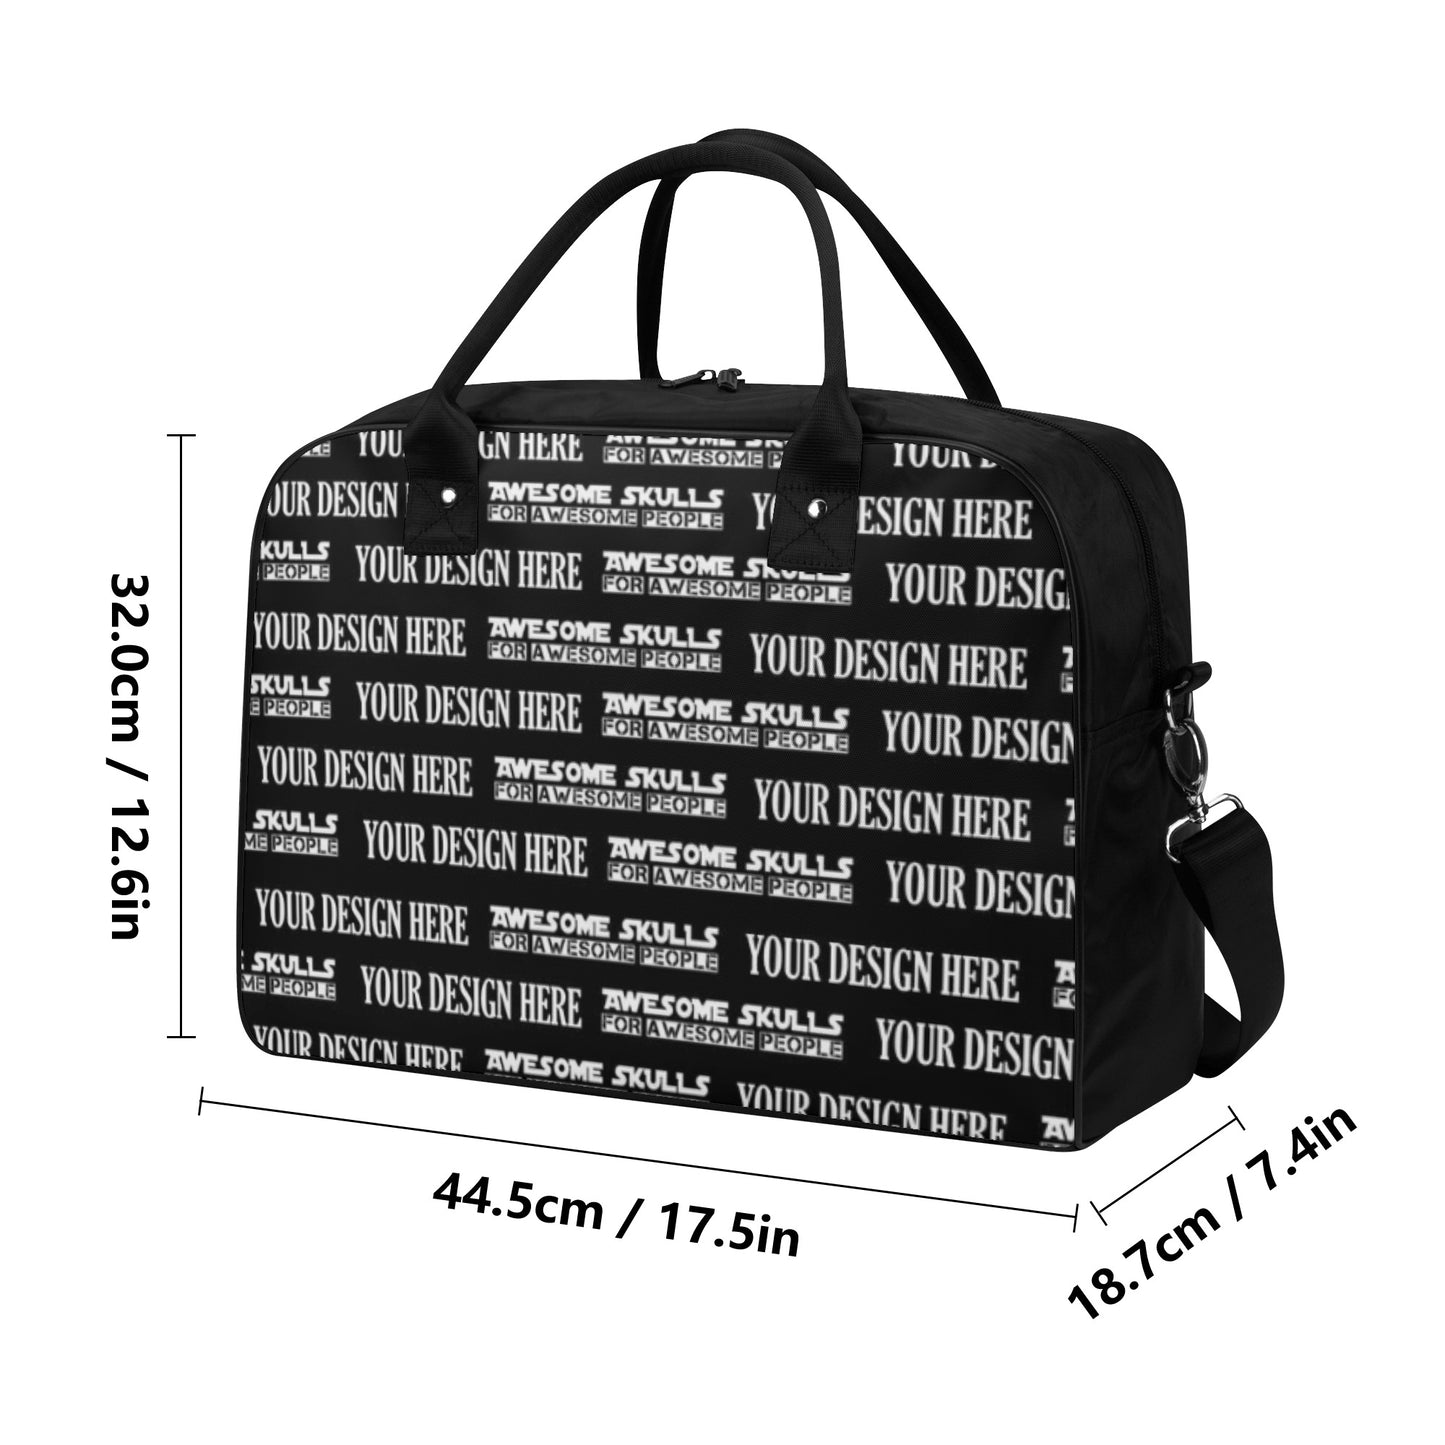 Custom Print on demand POD New Nylon Tote Bags